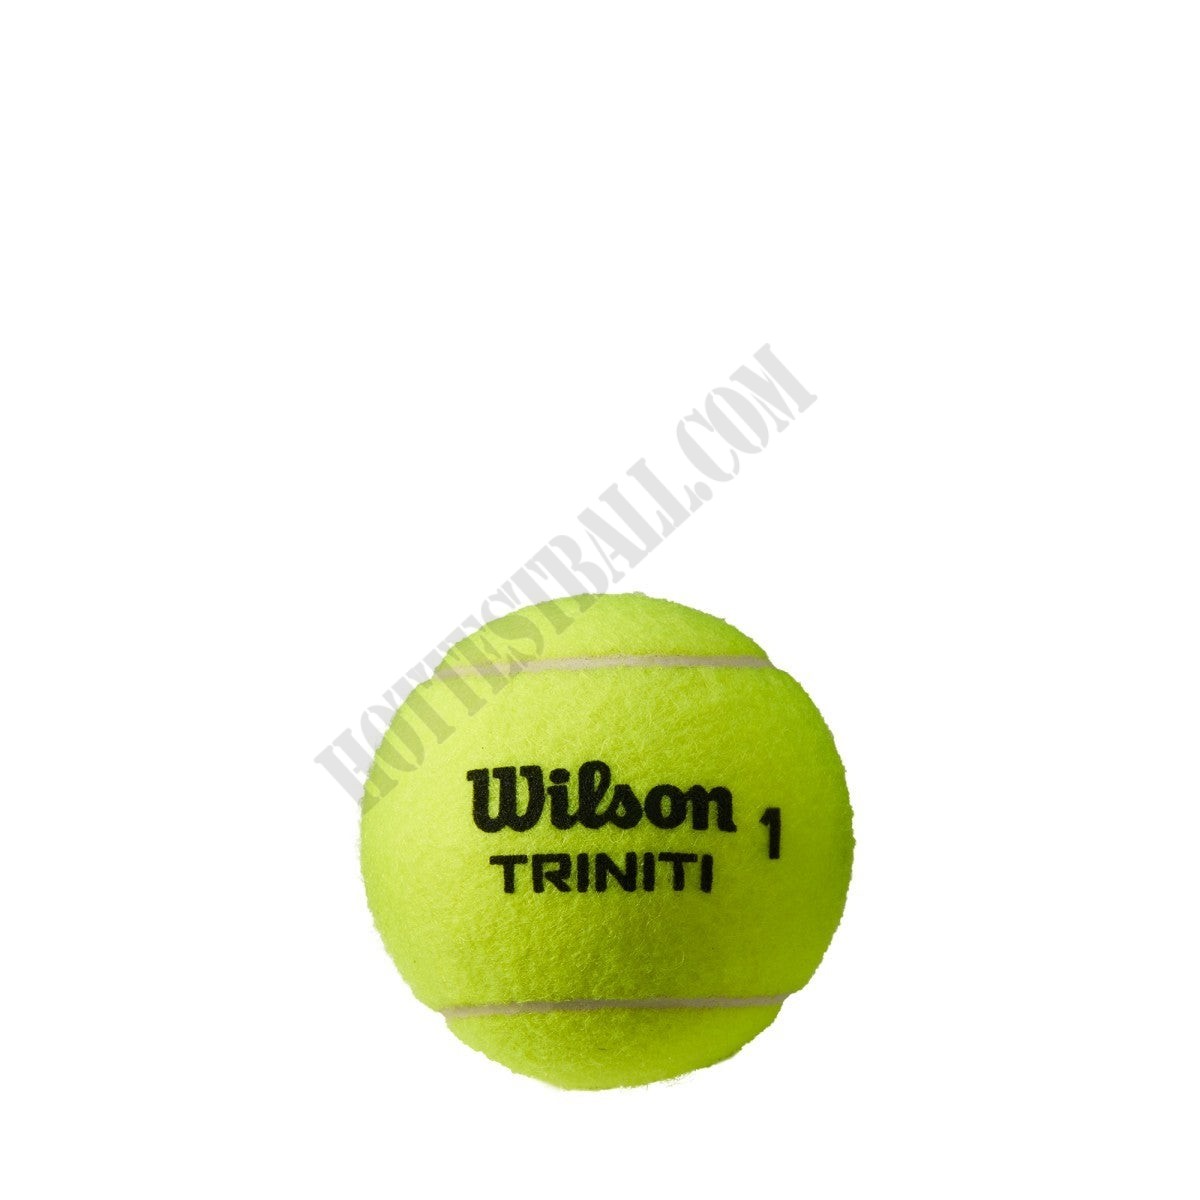 Triniti Tennis Balls - Case - Wilson Discount Store - -3